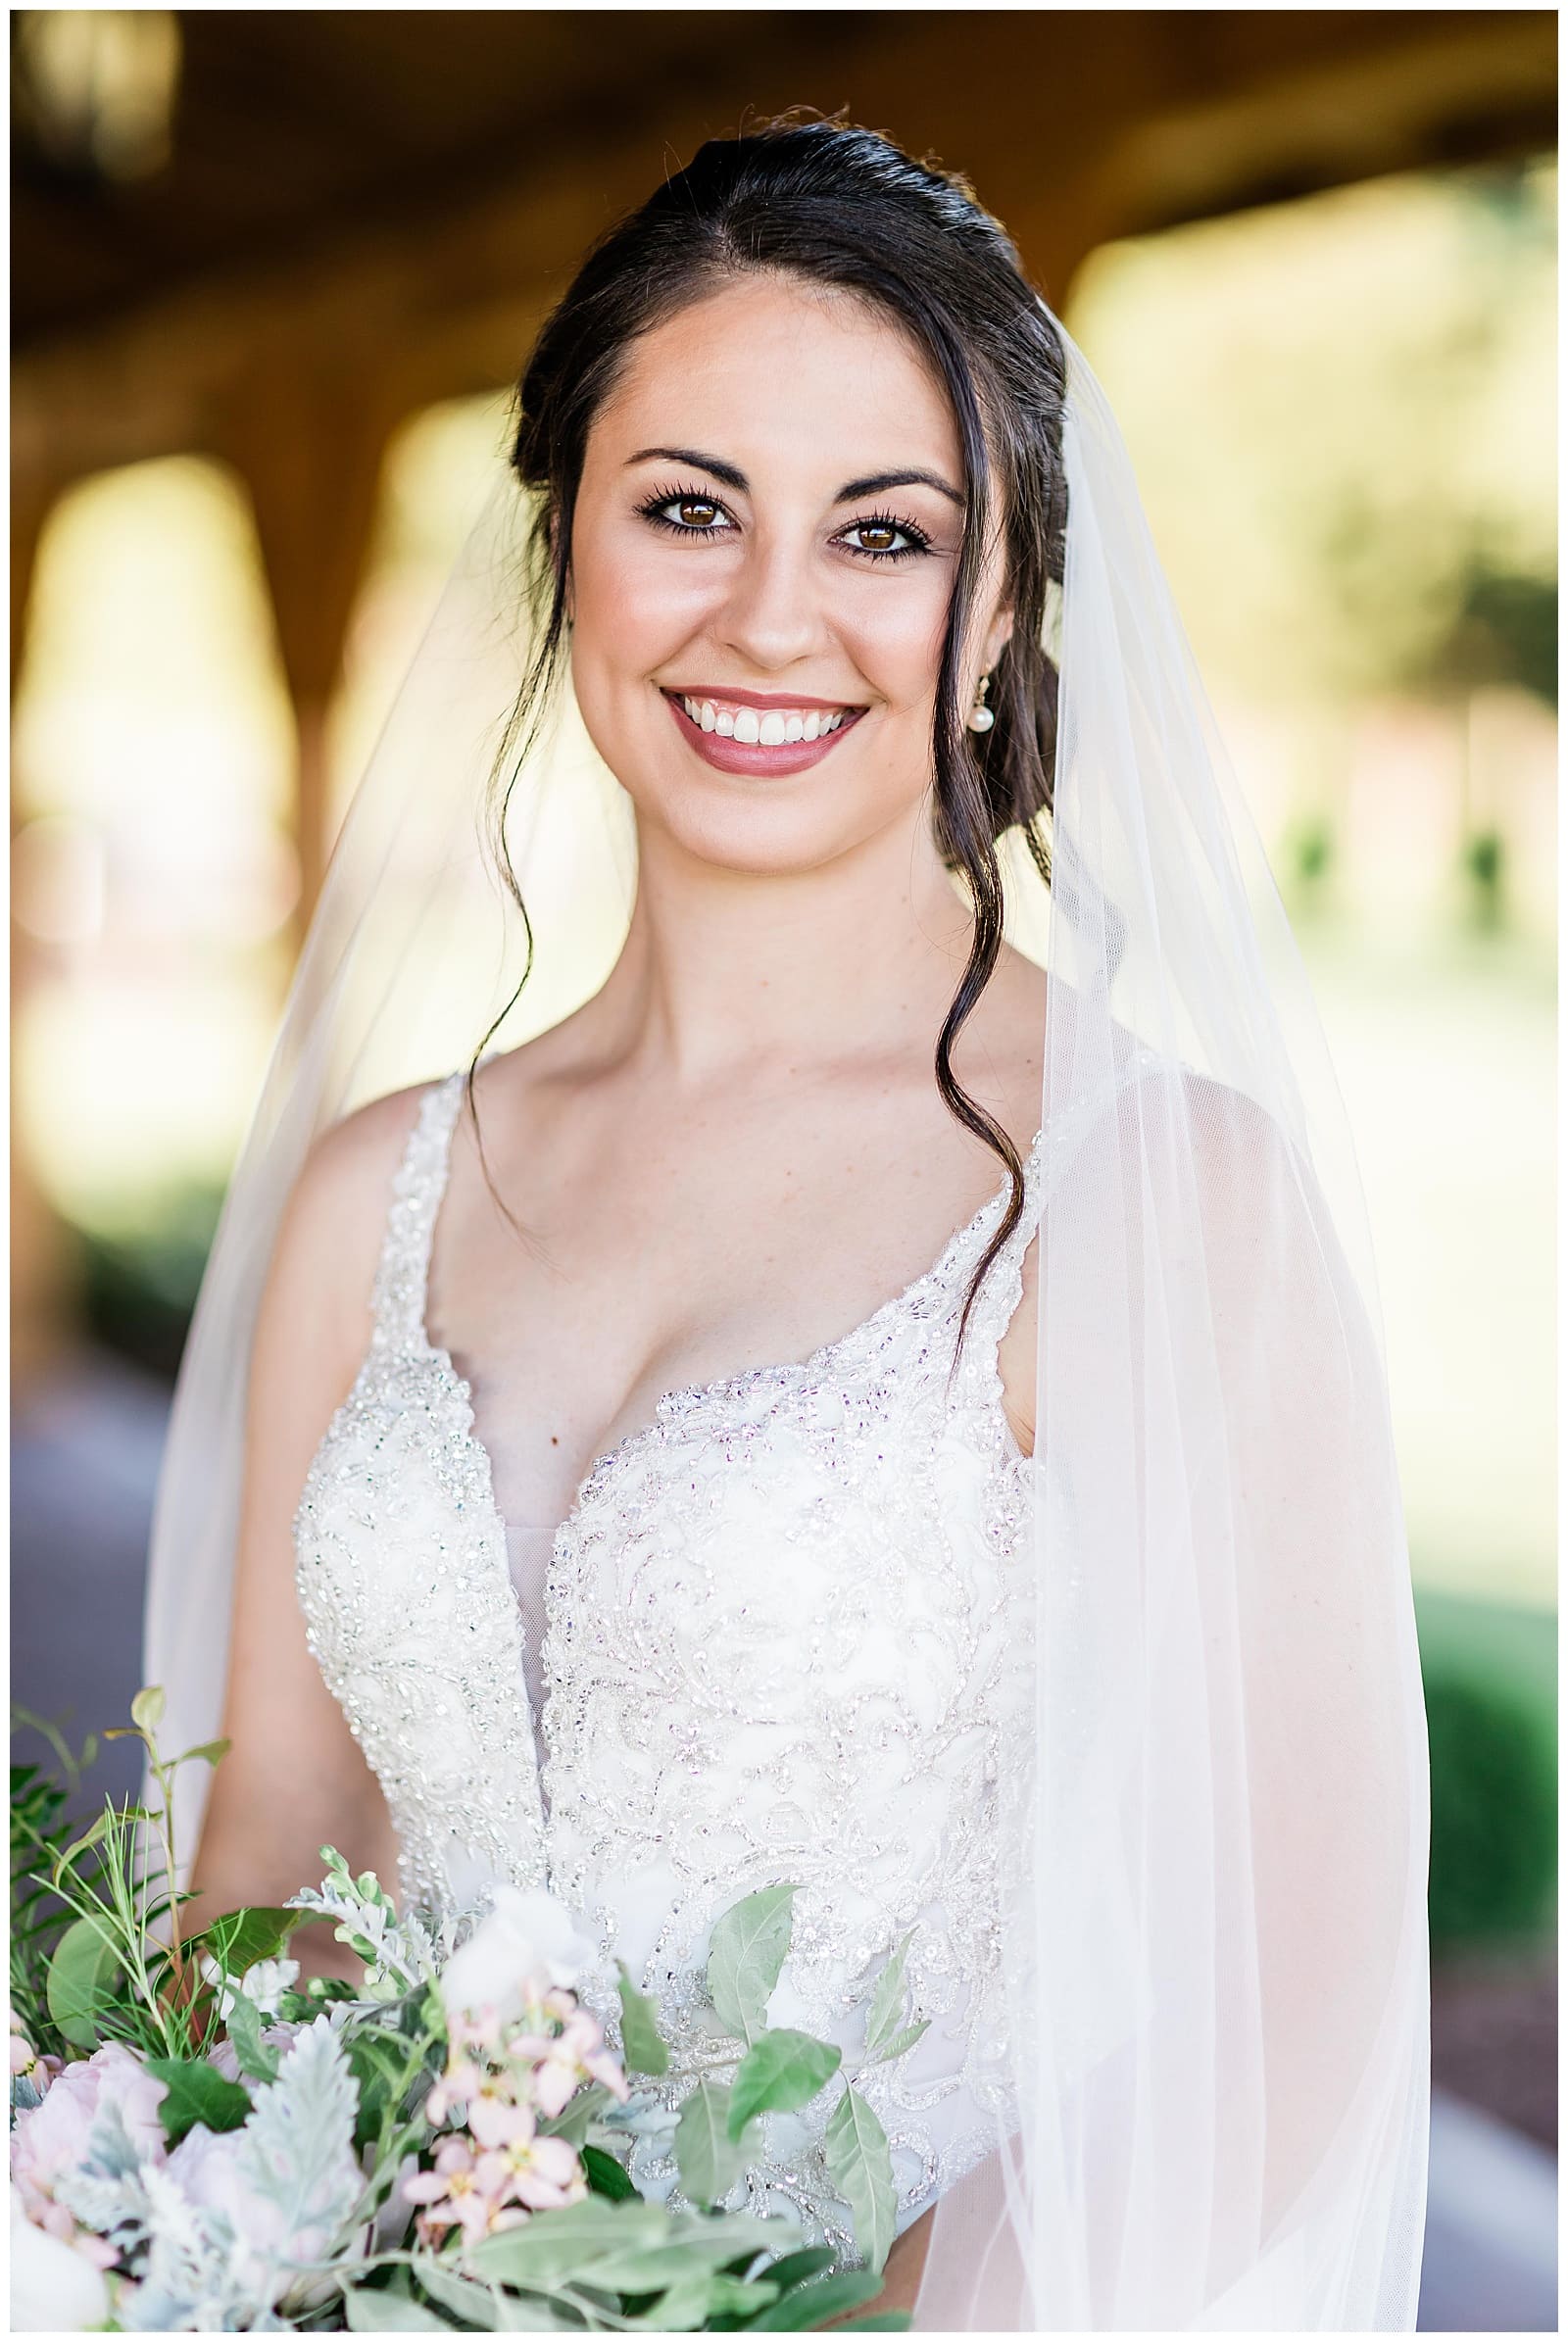 Danielle-Defayette-Photography-Middle-Fork-Barn-Abingdon-Wedding-2020_0004.jpg